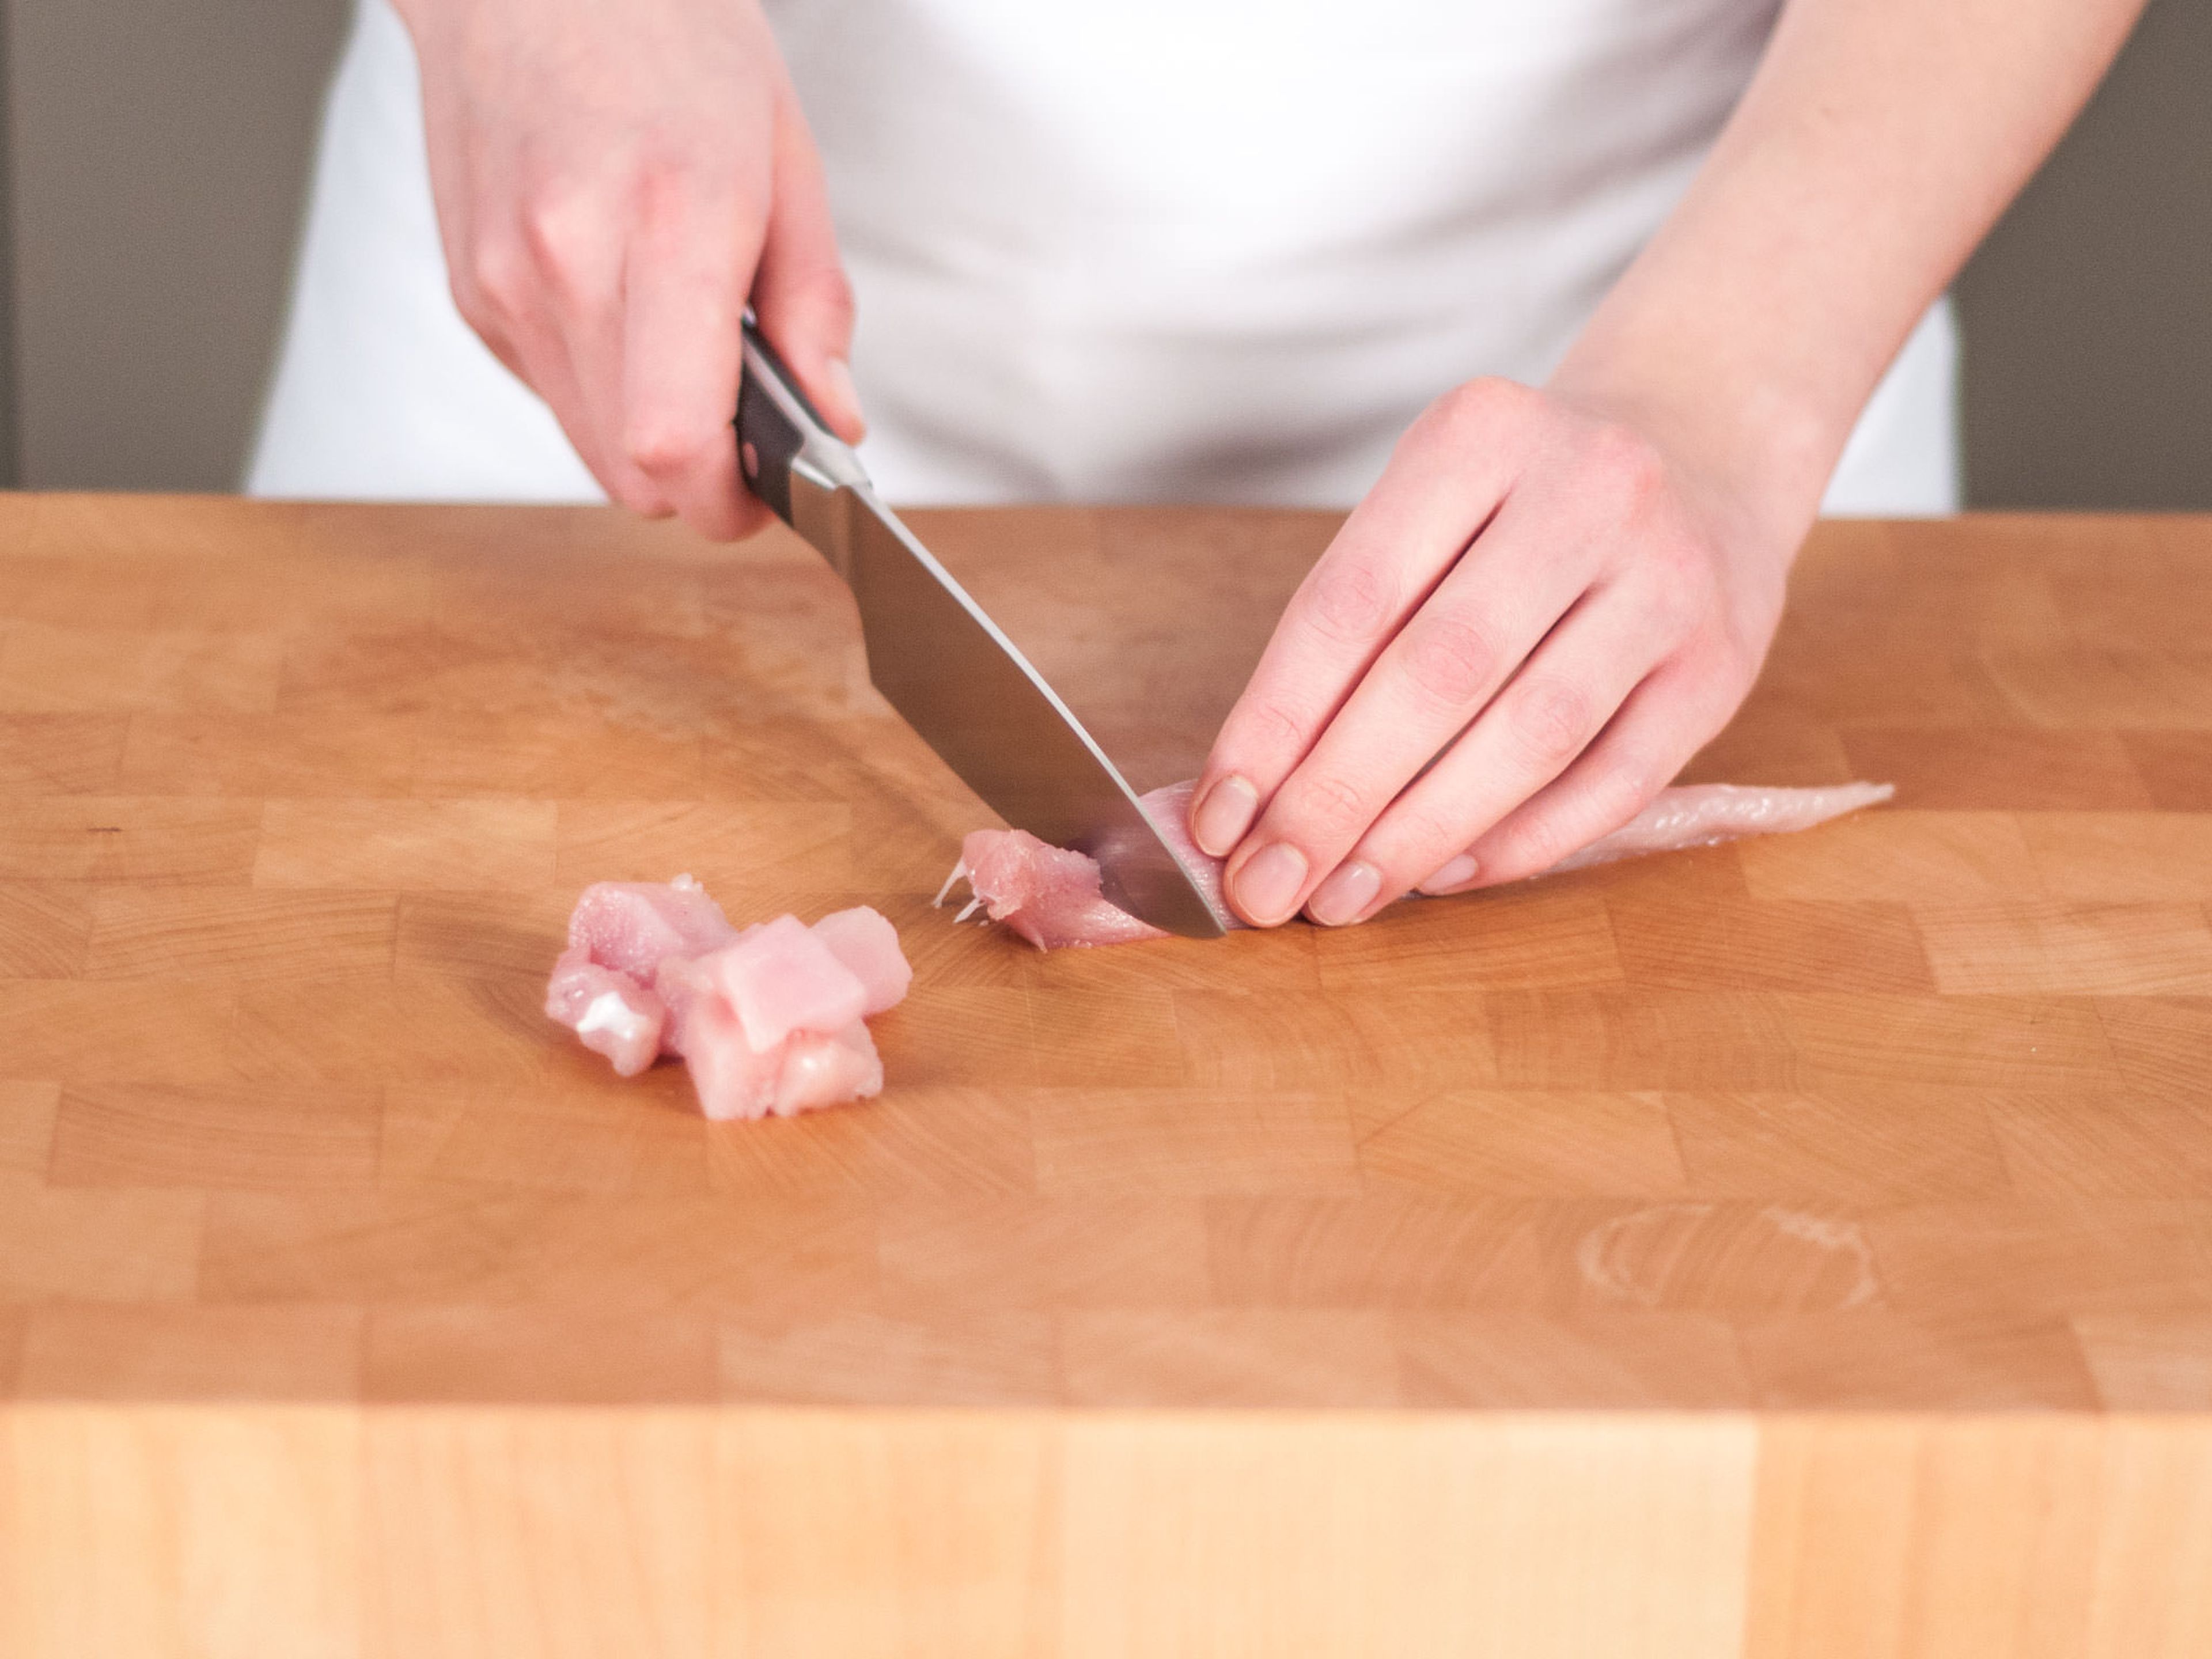 Cut chicken breast into bite-sized pieces.